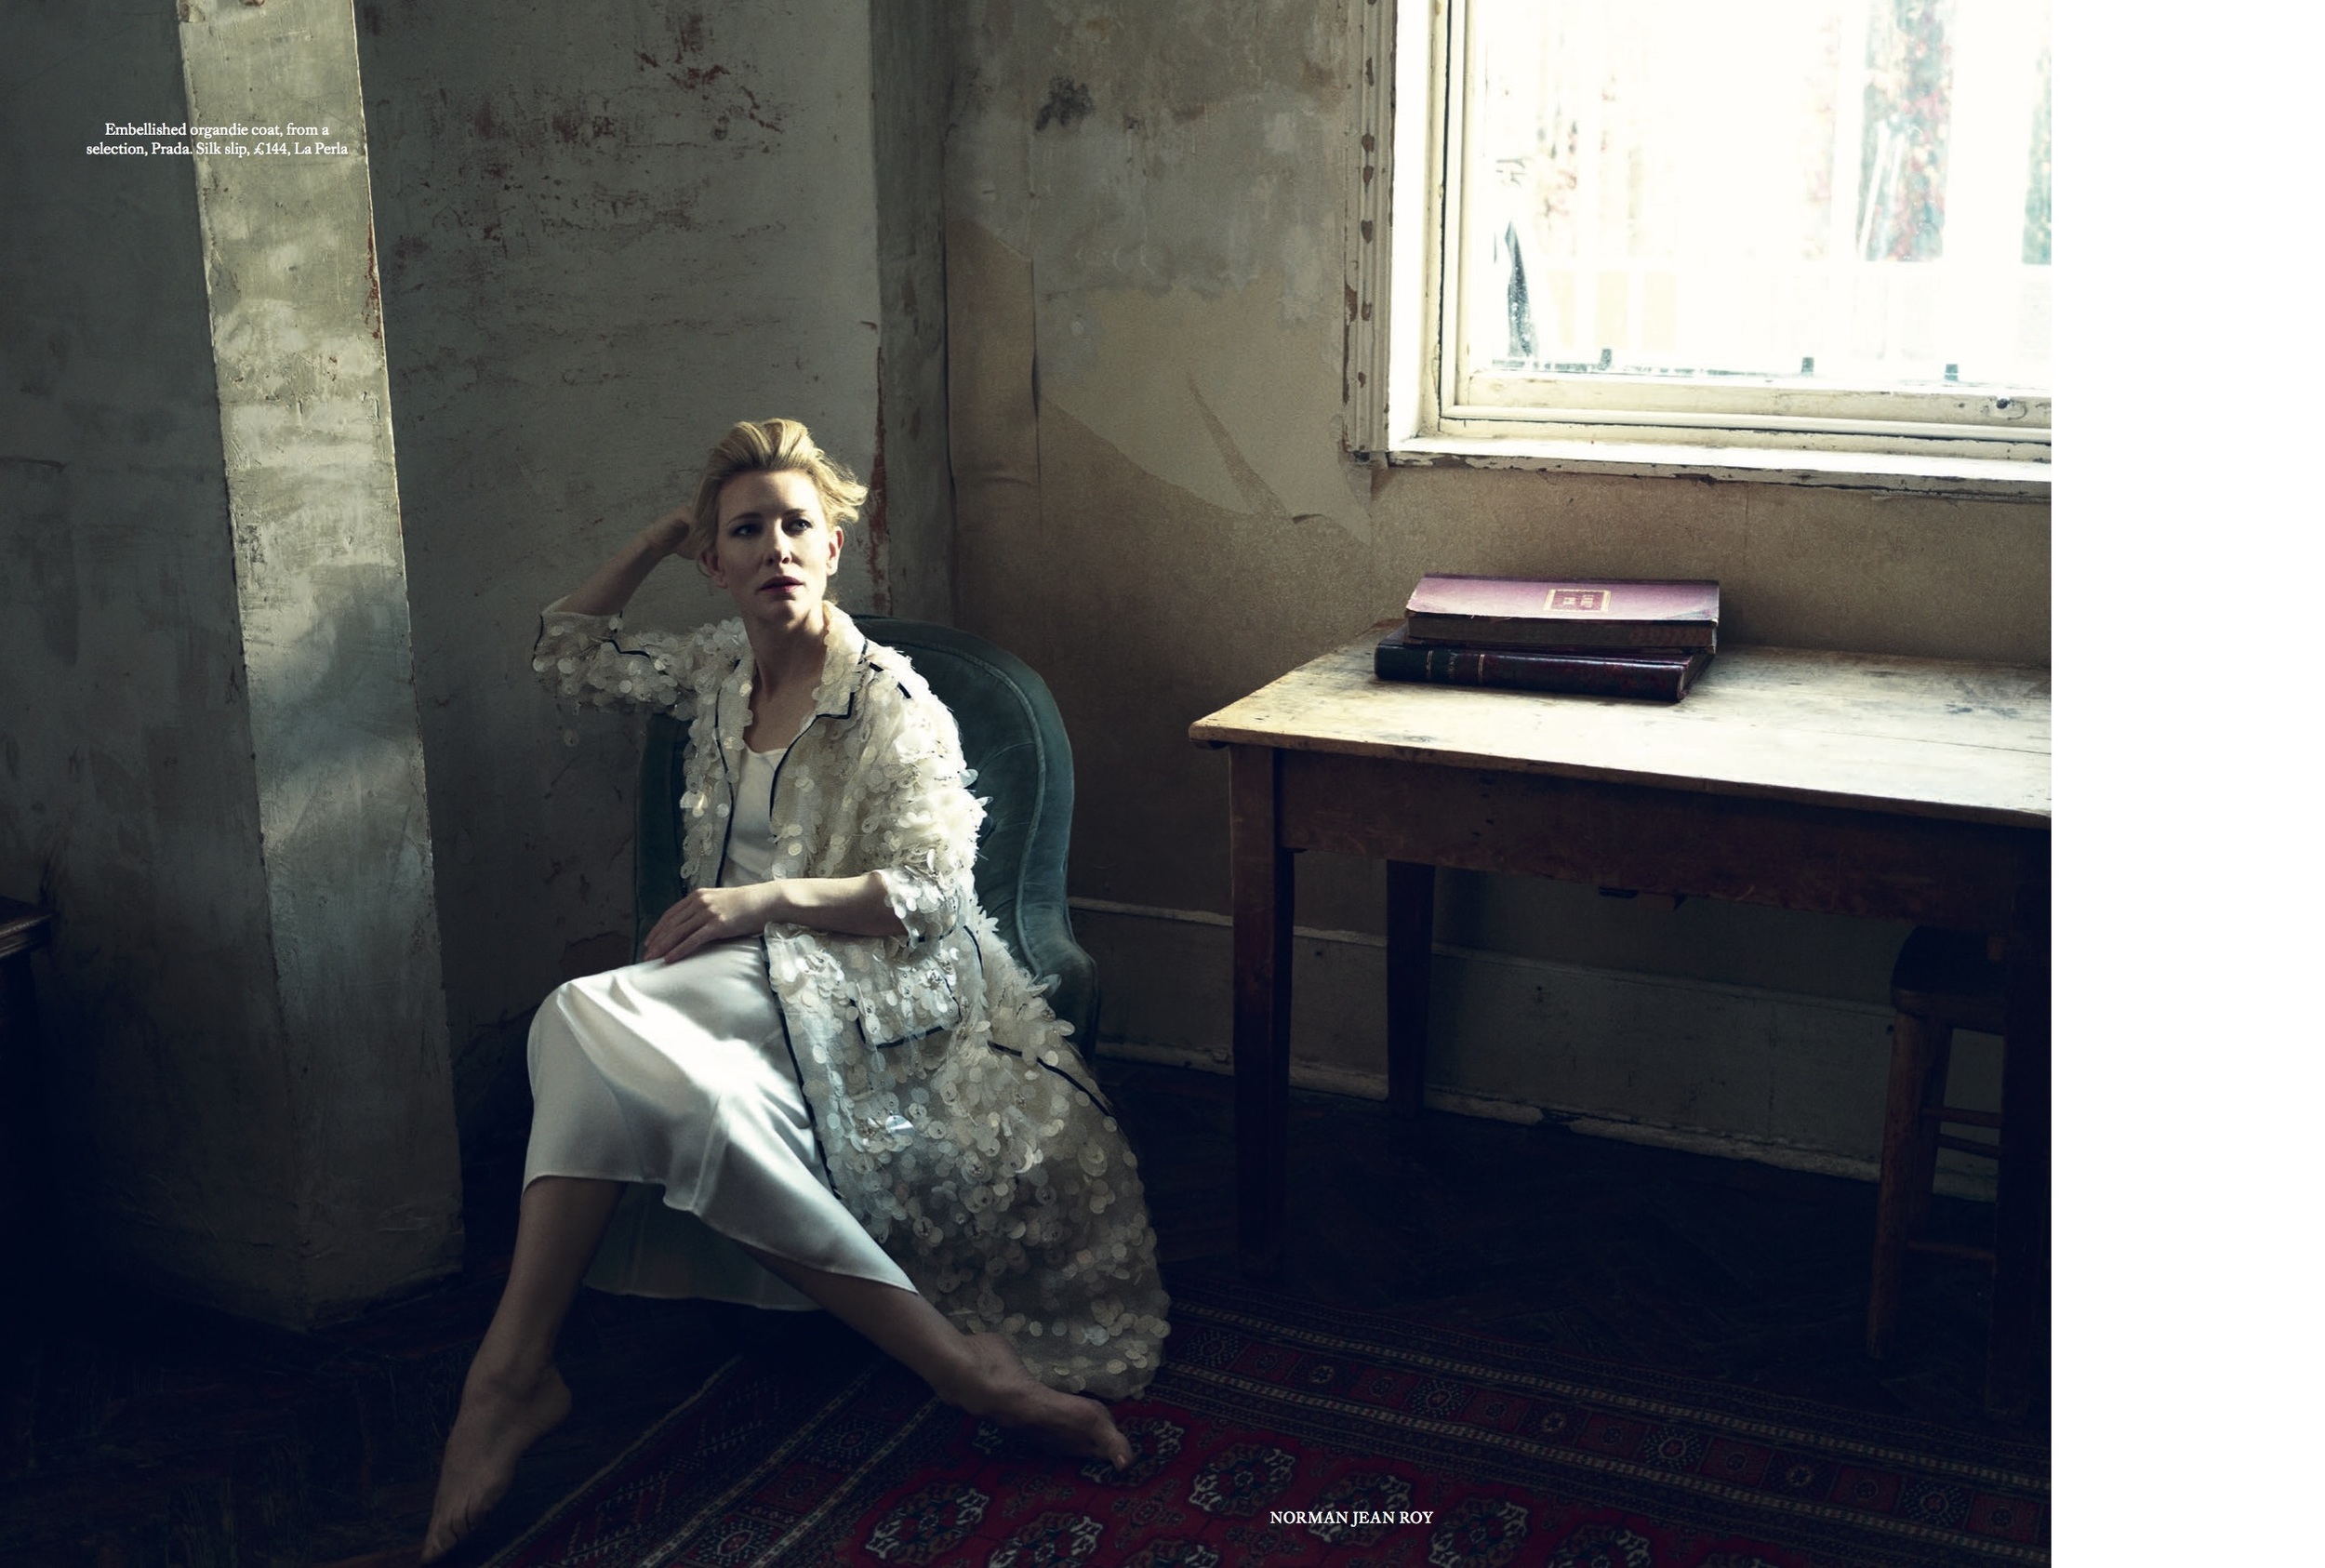 Cate Blanchett Cover Story for Harper's Bazaar, styled by Charlie Harrington. Spread 5.